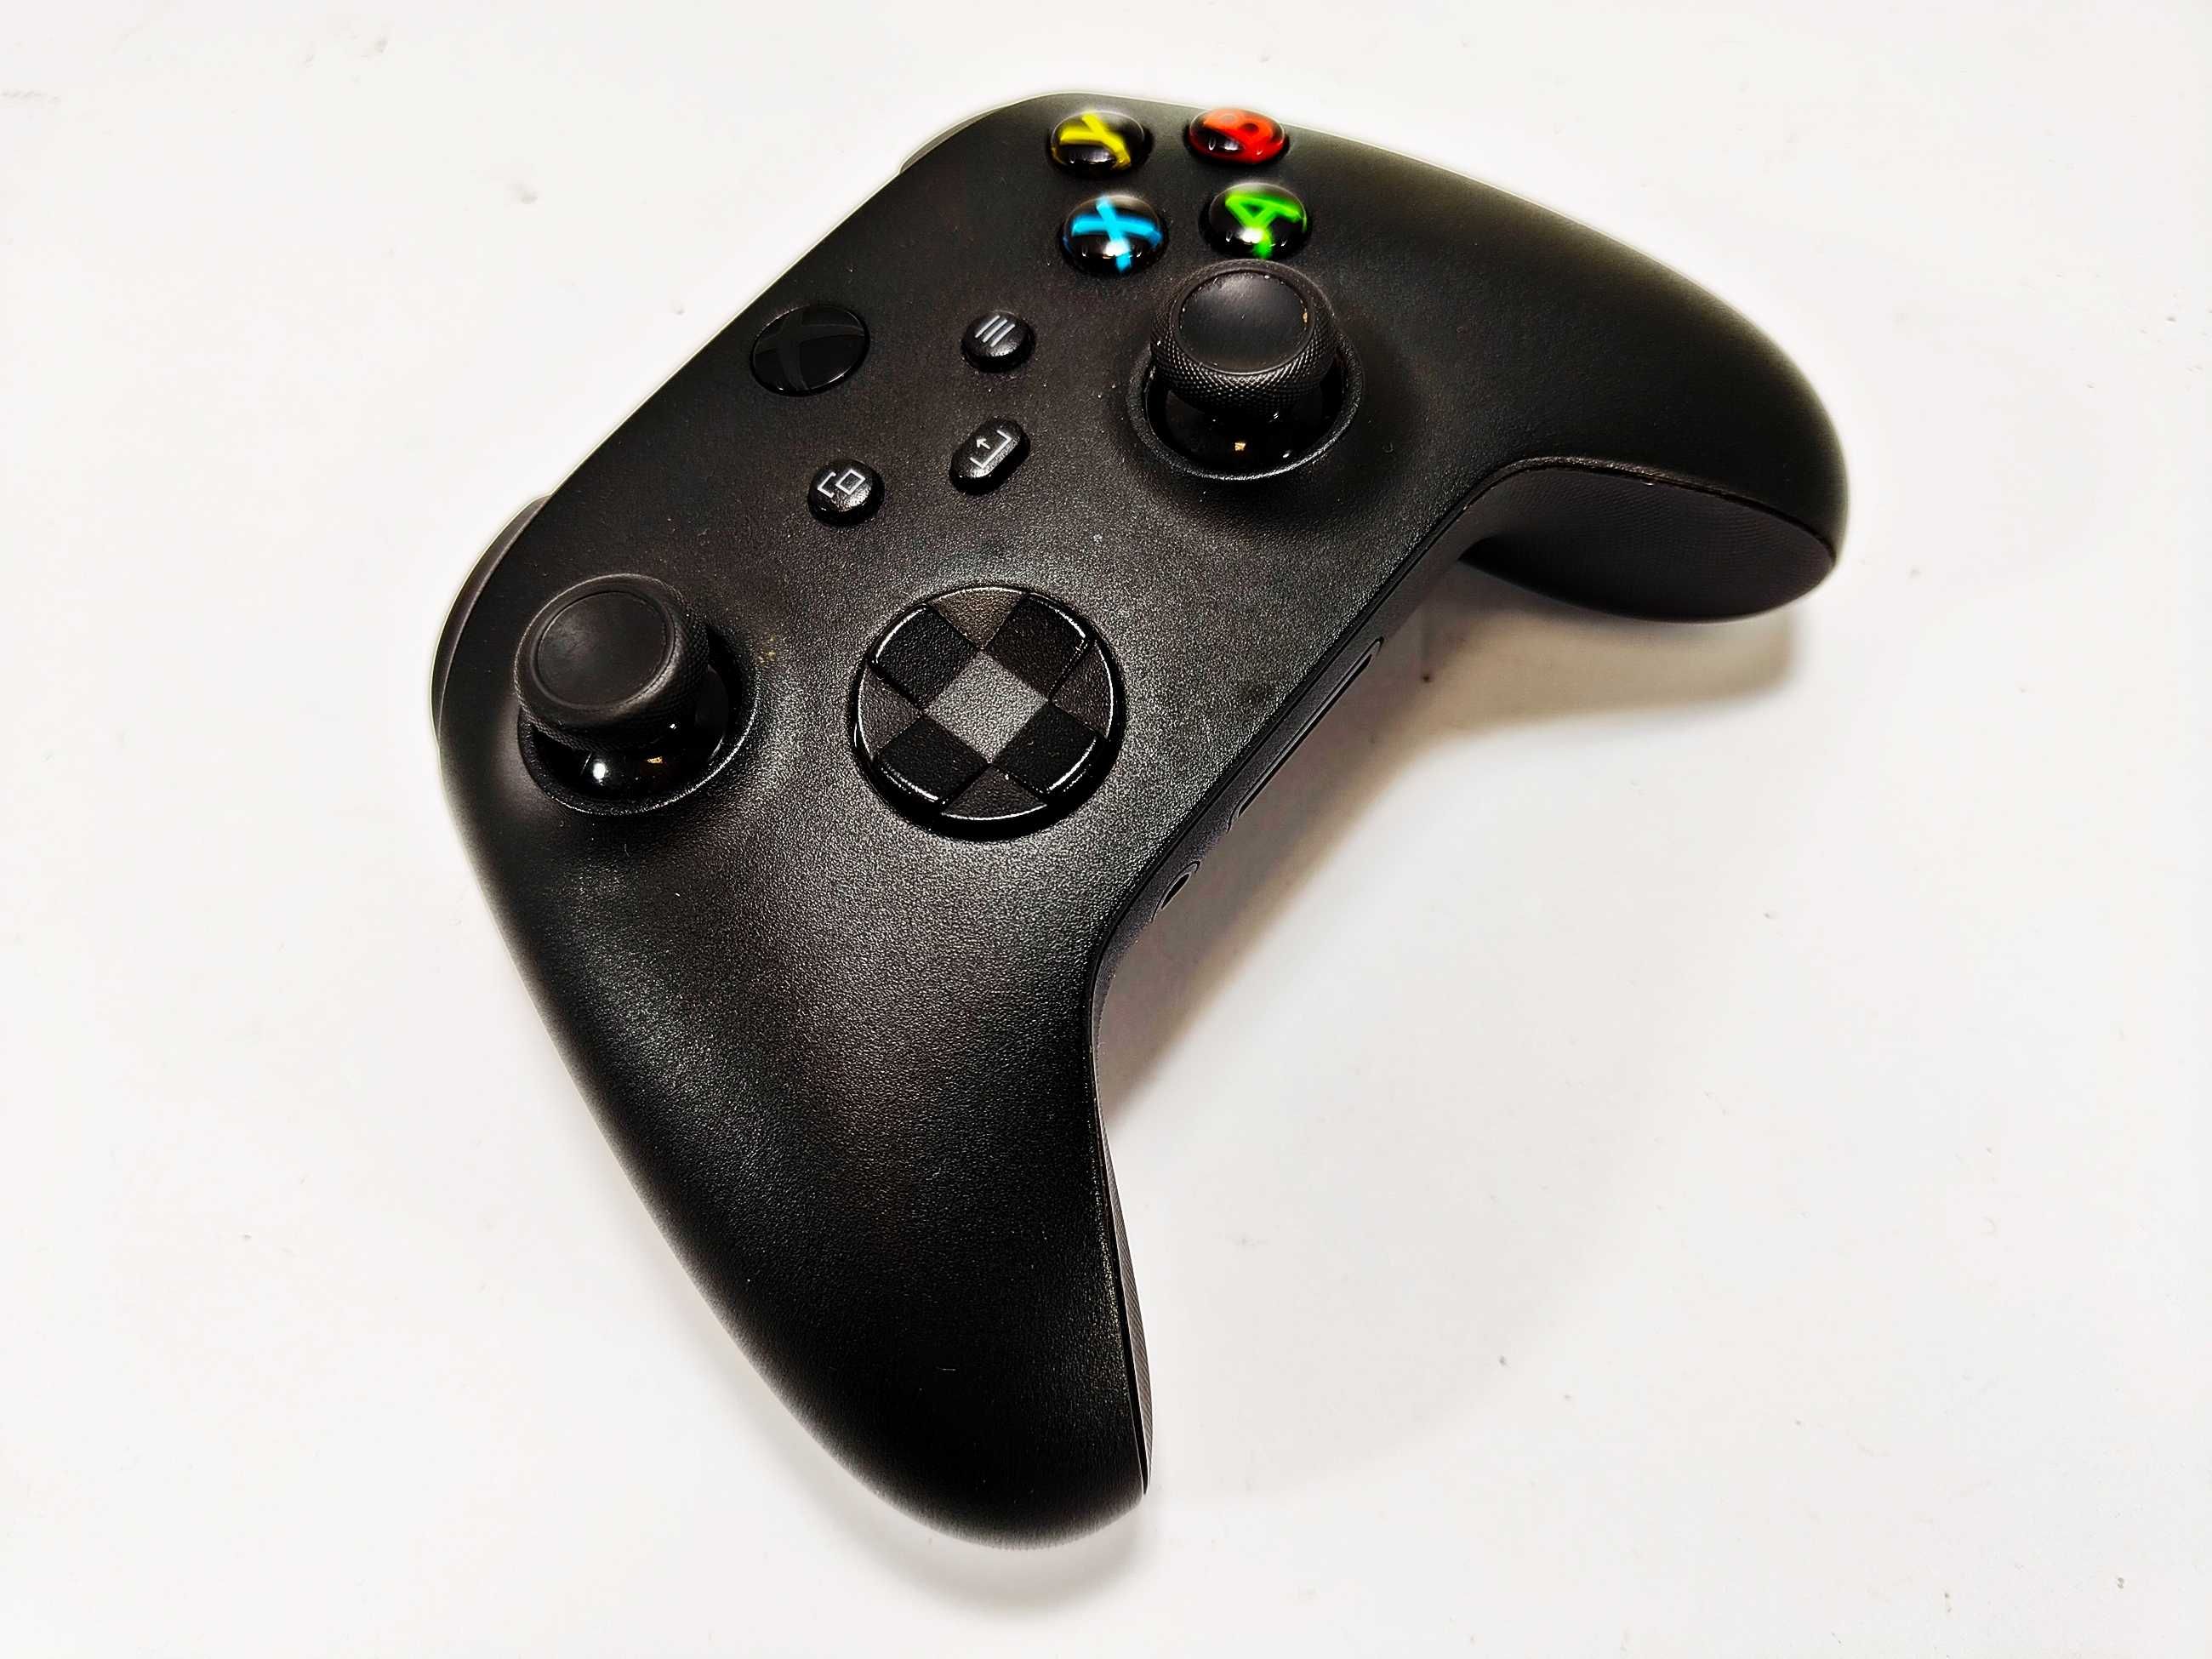 Pad Microsoft Xbox Series czarny